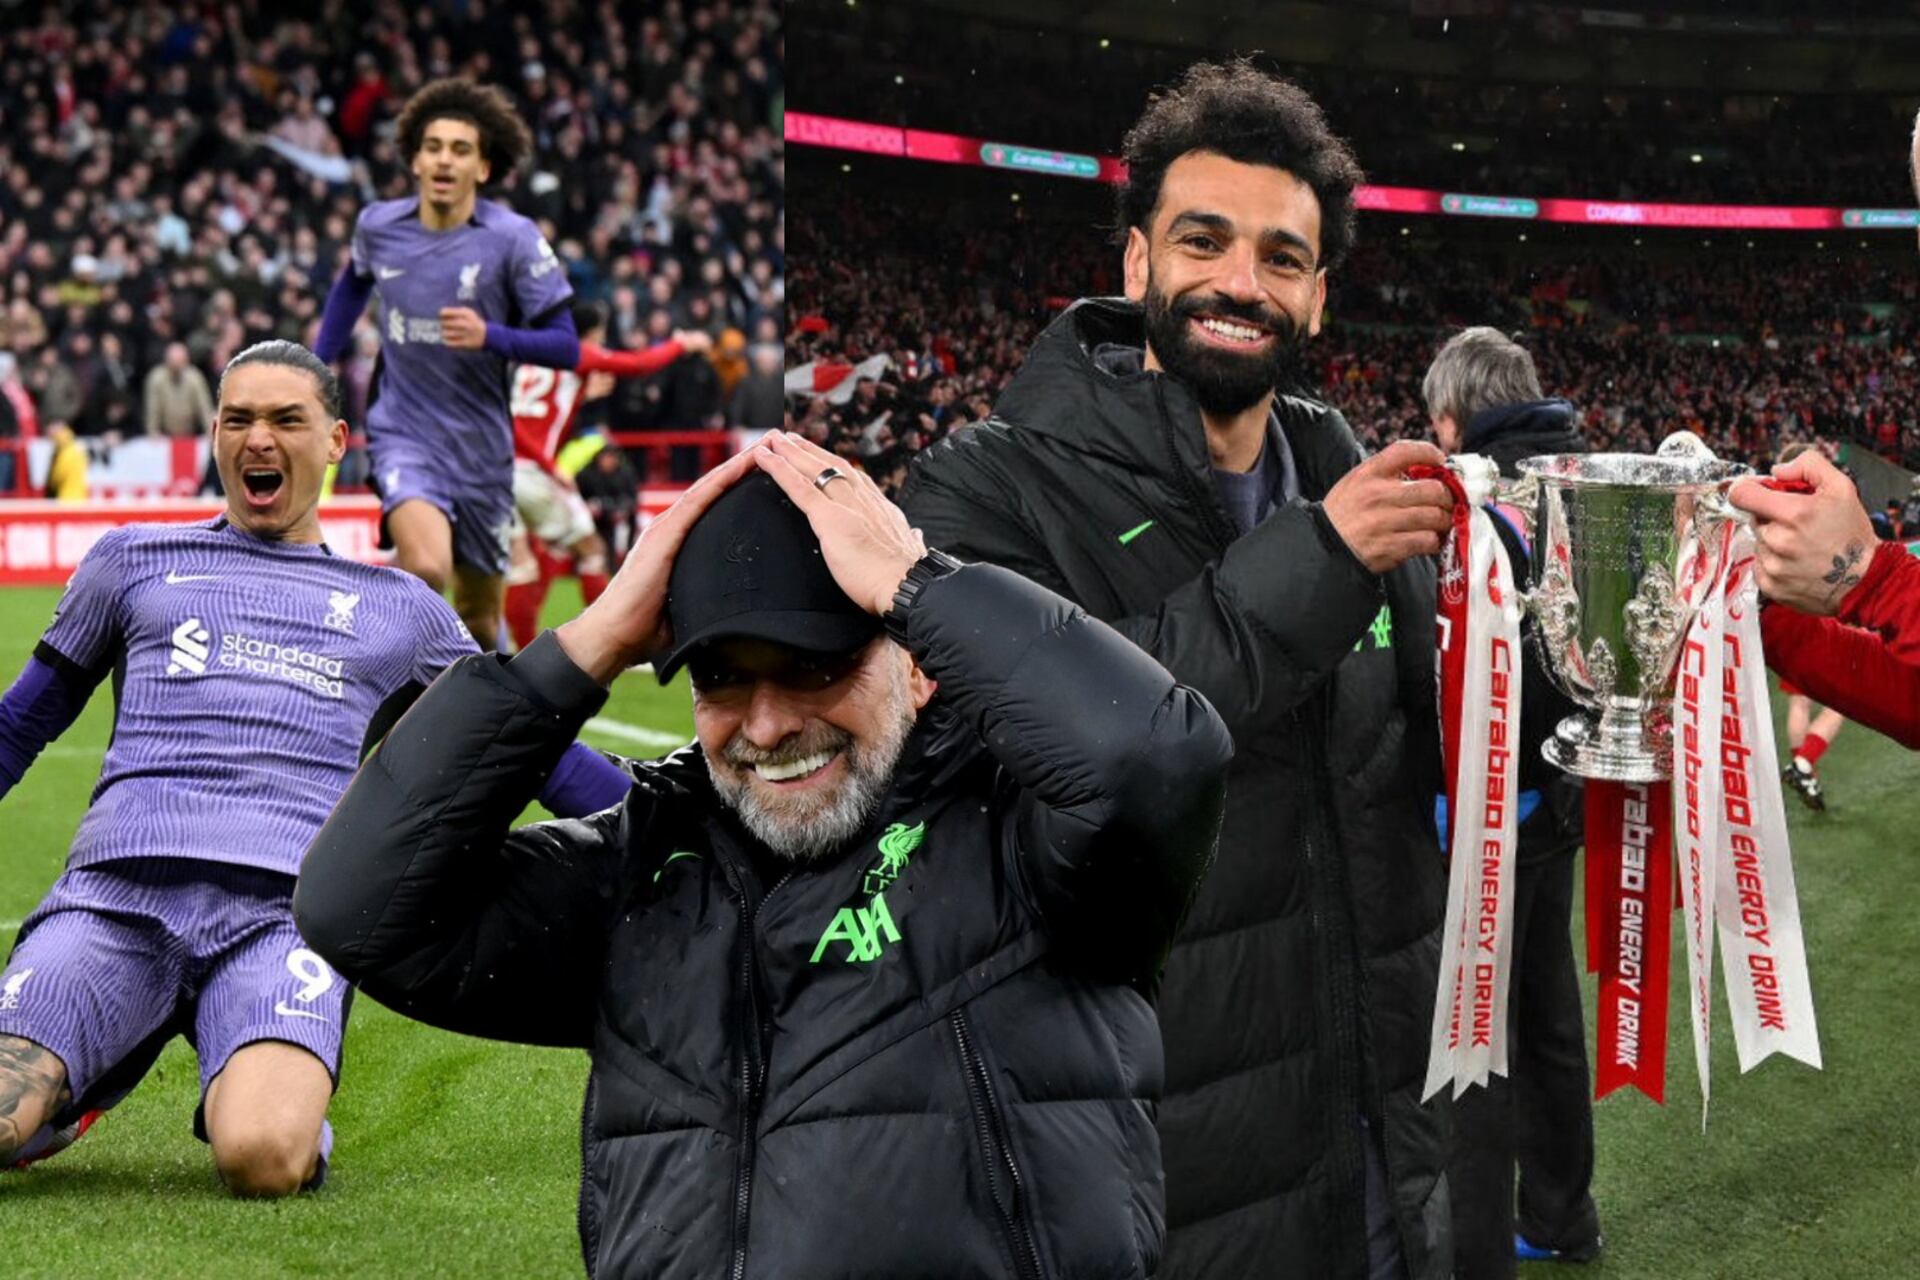 As Liverpool celebrates dramatic win, Klopp receives bad news about Salah